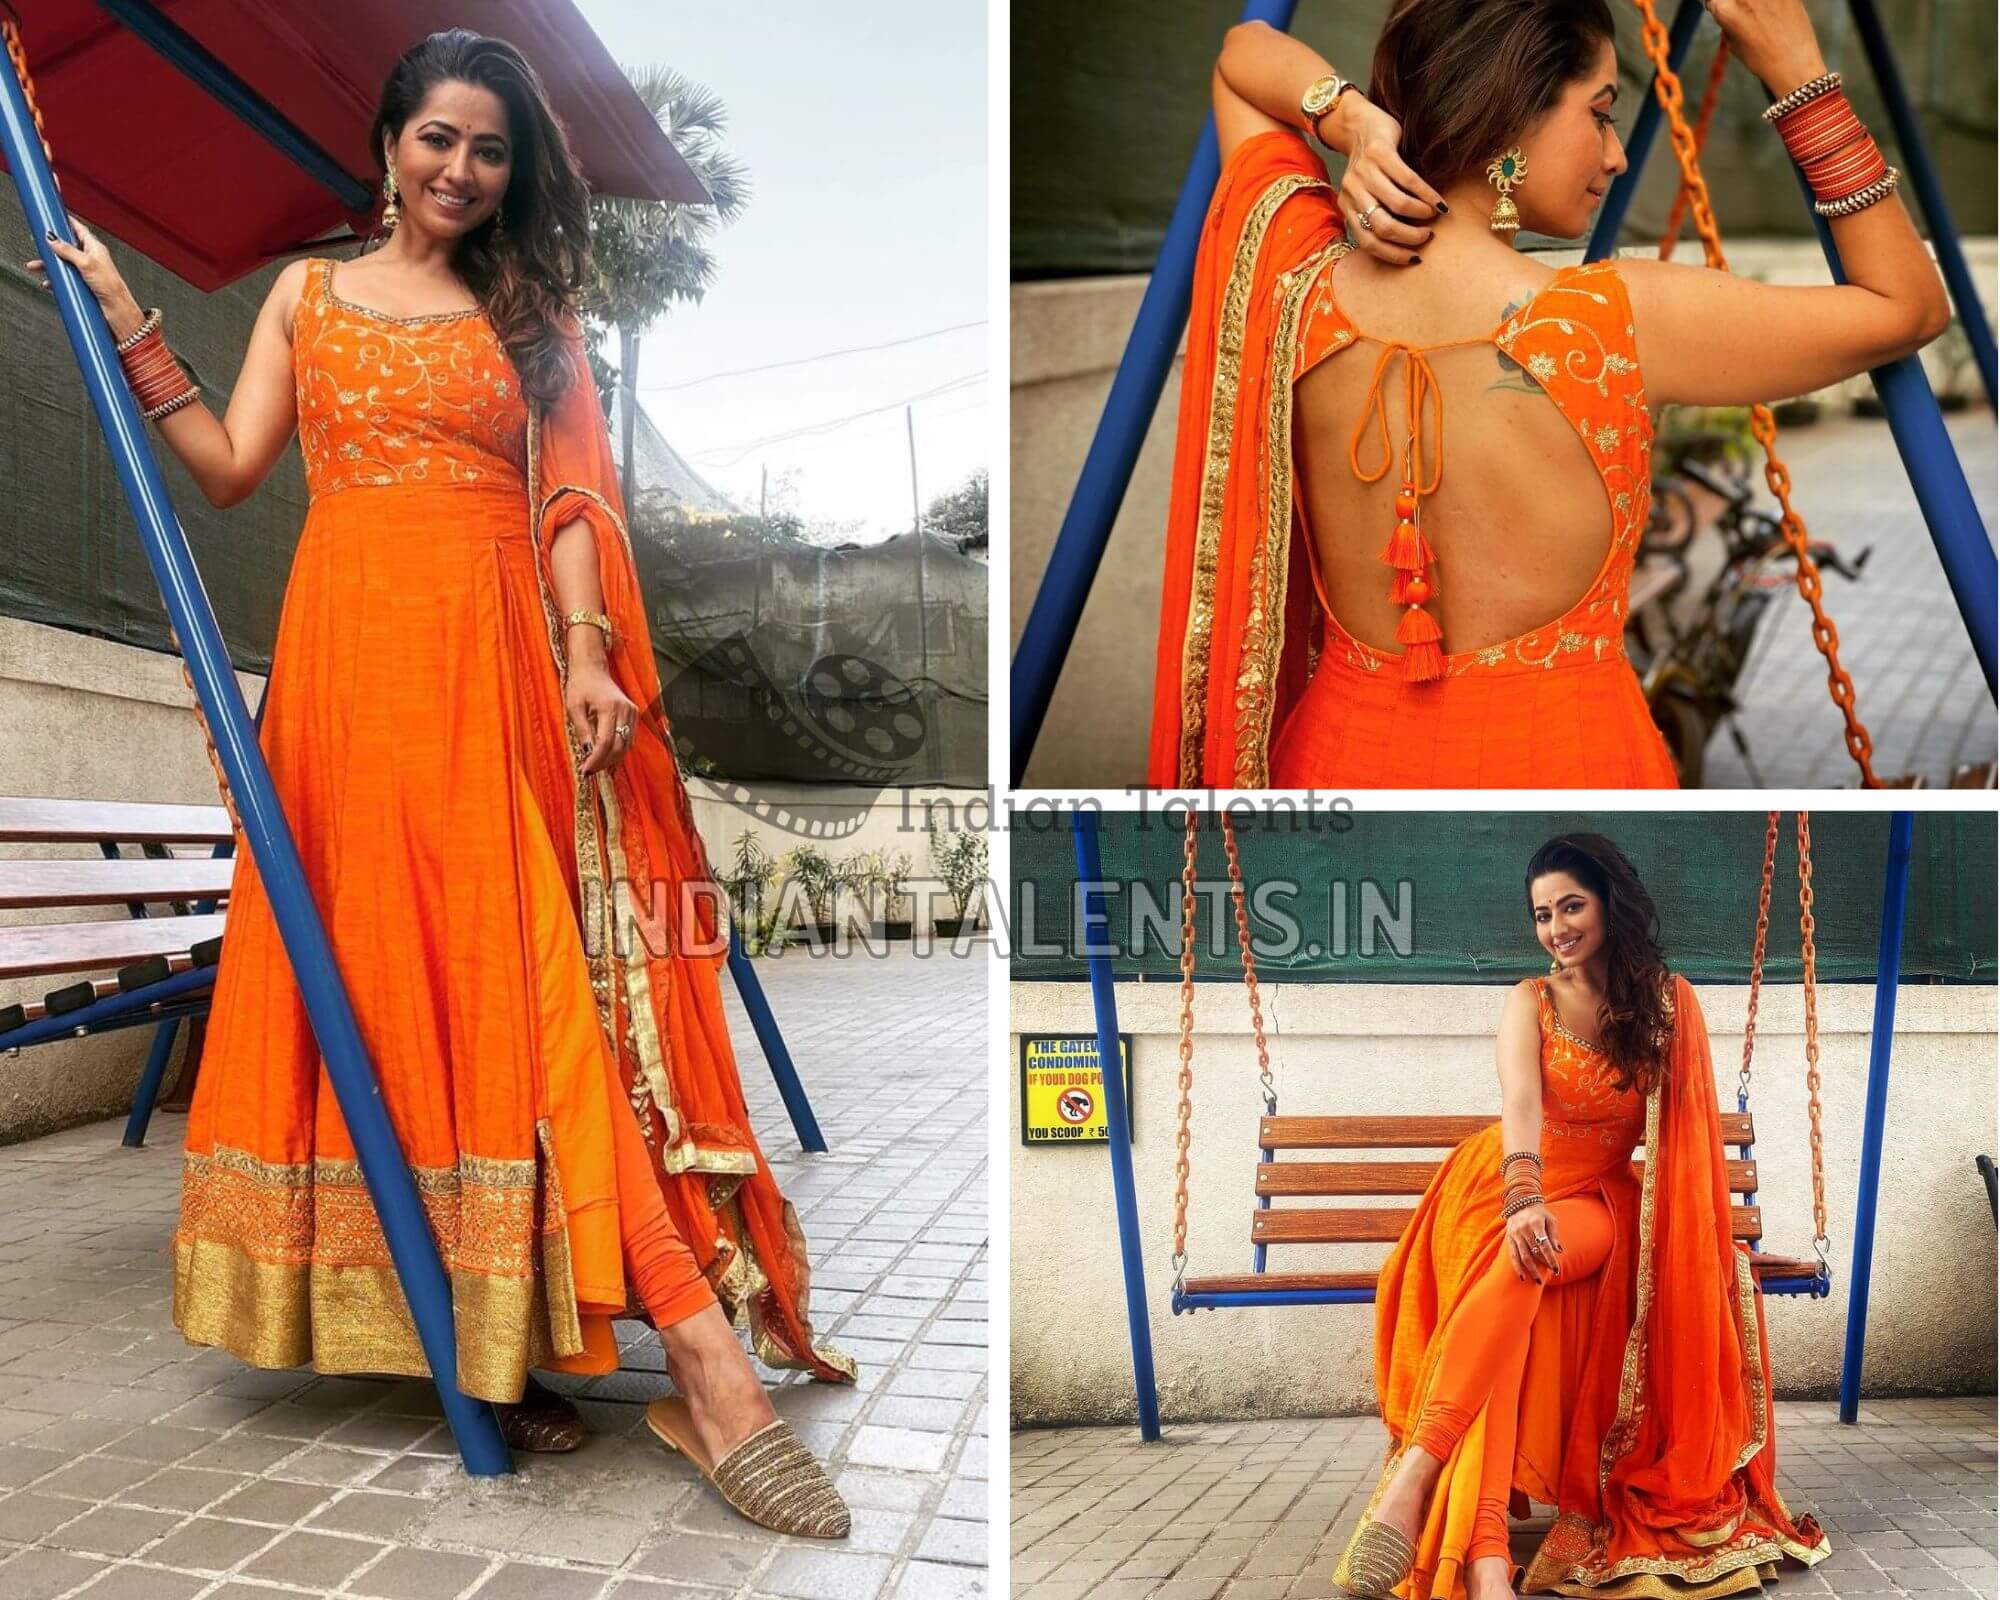 Actress Ridheema Tiwari in an orange attire